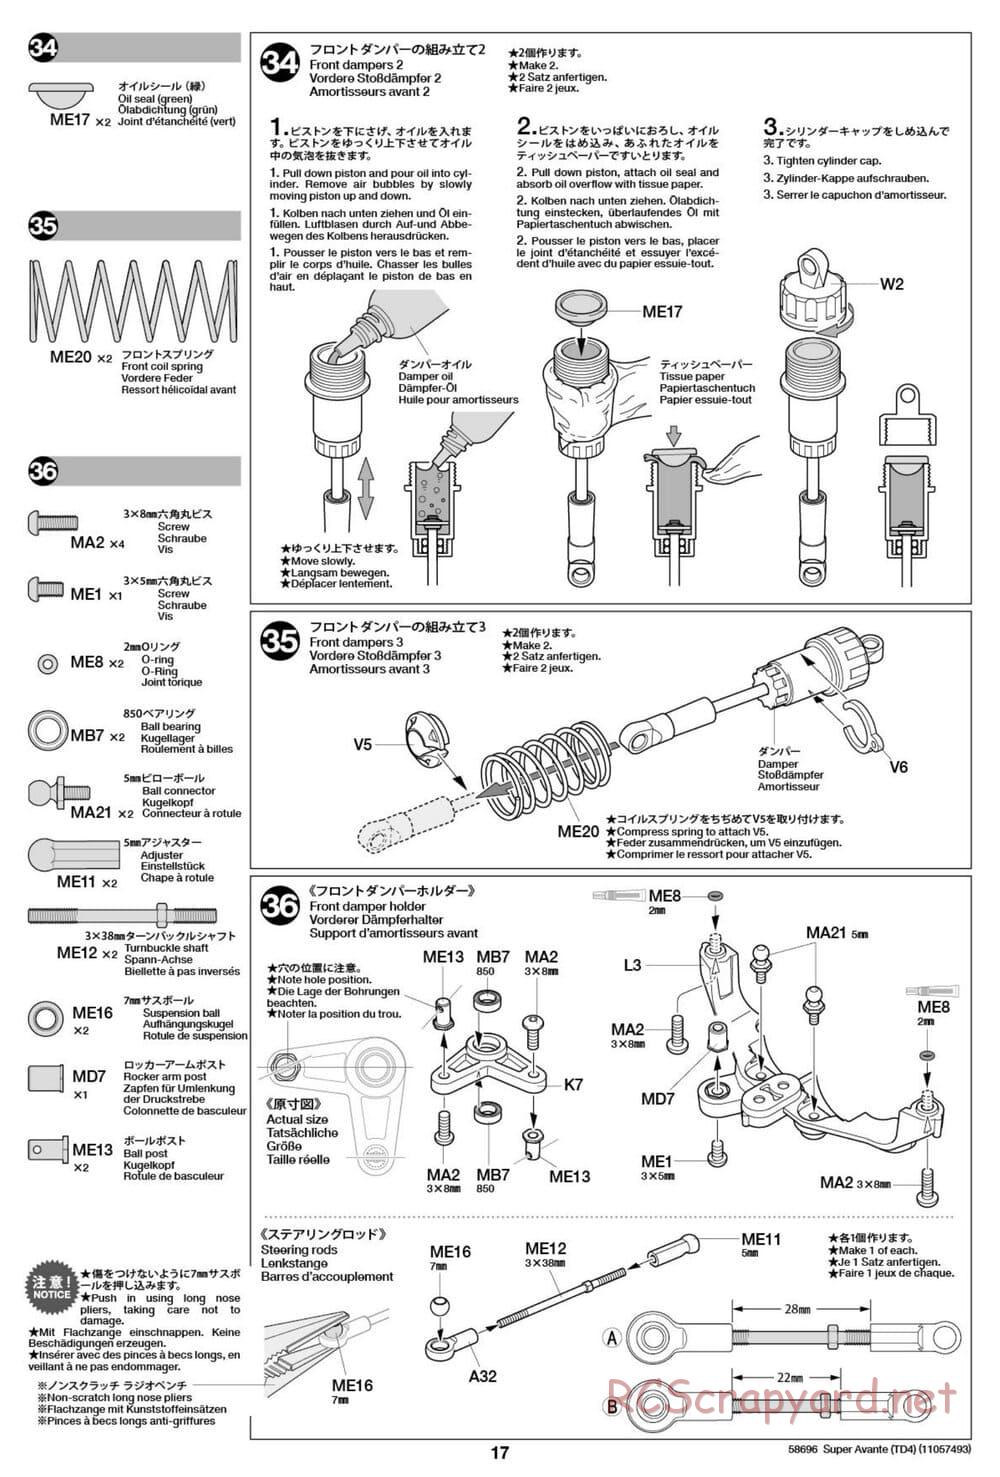 Tamiya - Super Avante - TD4 Chassis - Manual - Page 18